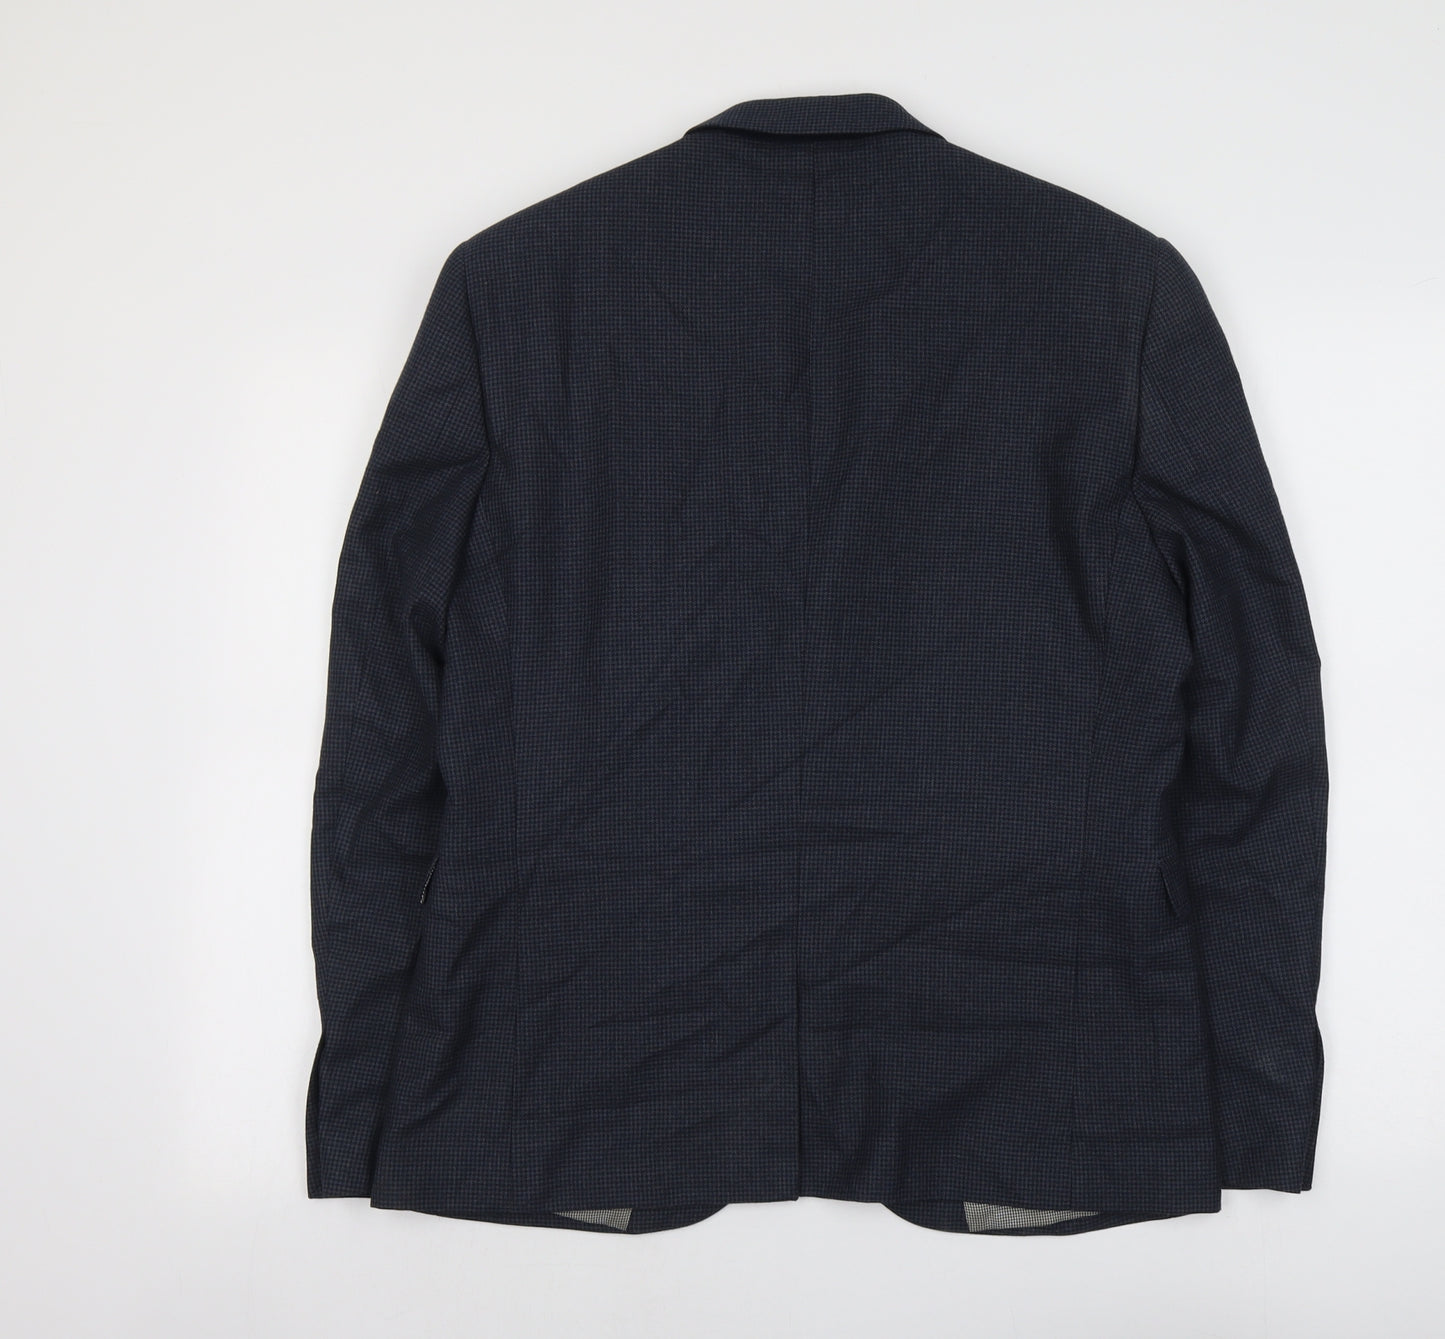 NEXT Mens Blue Geometric Polyester Jacket Suit Jacket Size S Regular